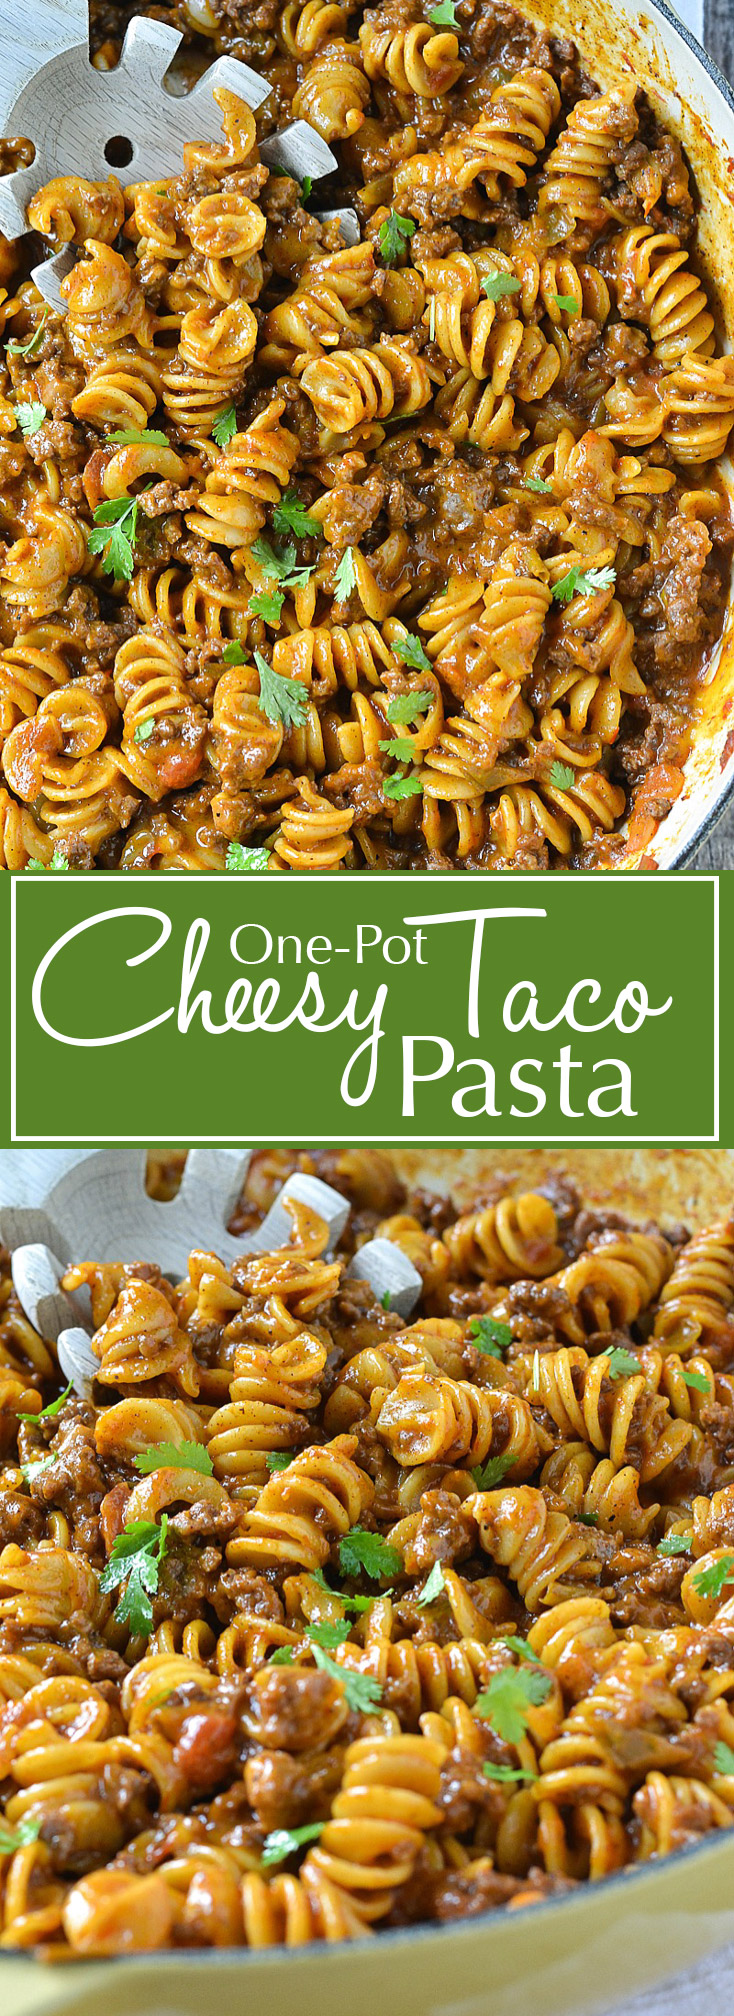 One-Pot Cheesy Taco Pasta | www.motherthyme.com